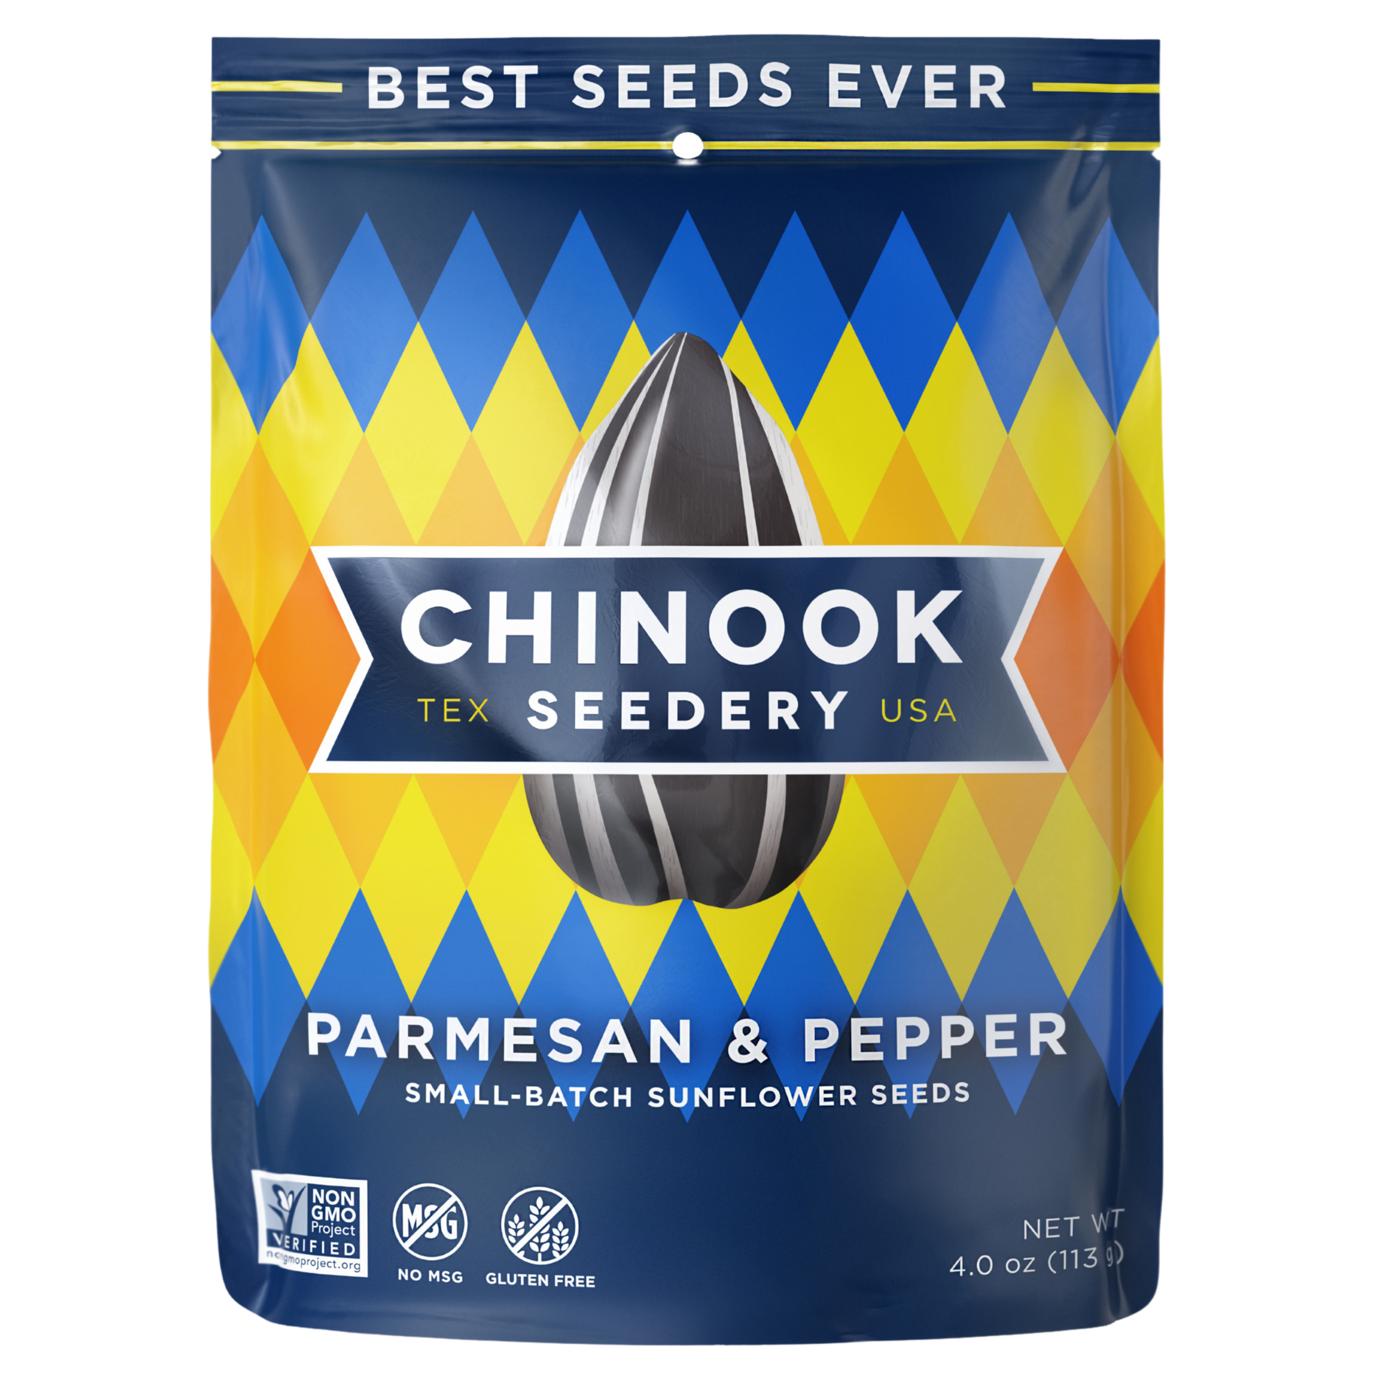 Chinook Seedery Sunflower Seeds Parmesan & Pepper; image 1 of 5